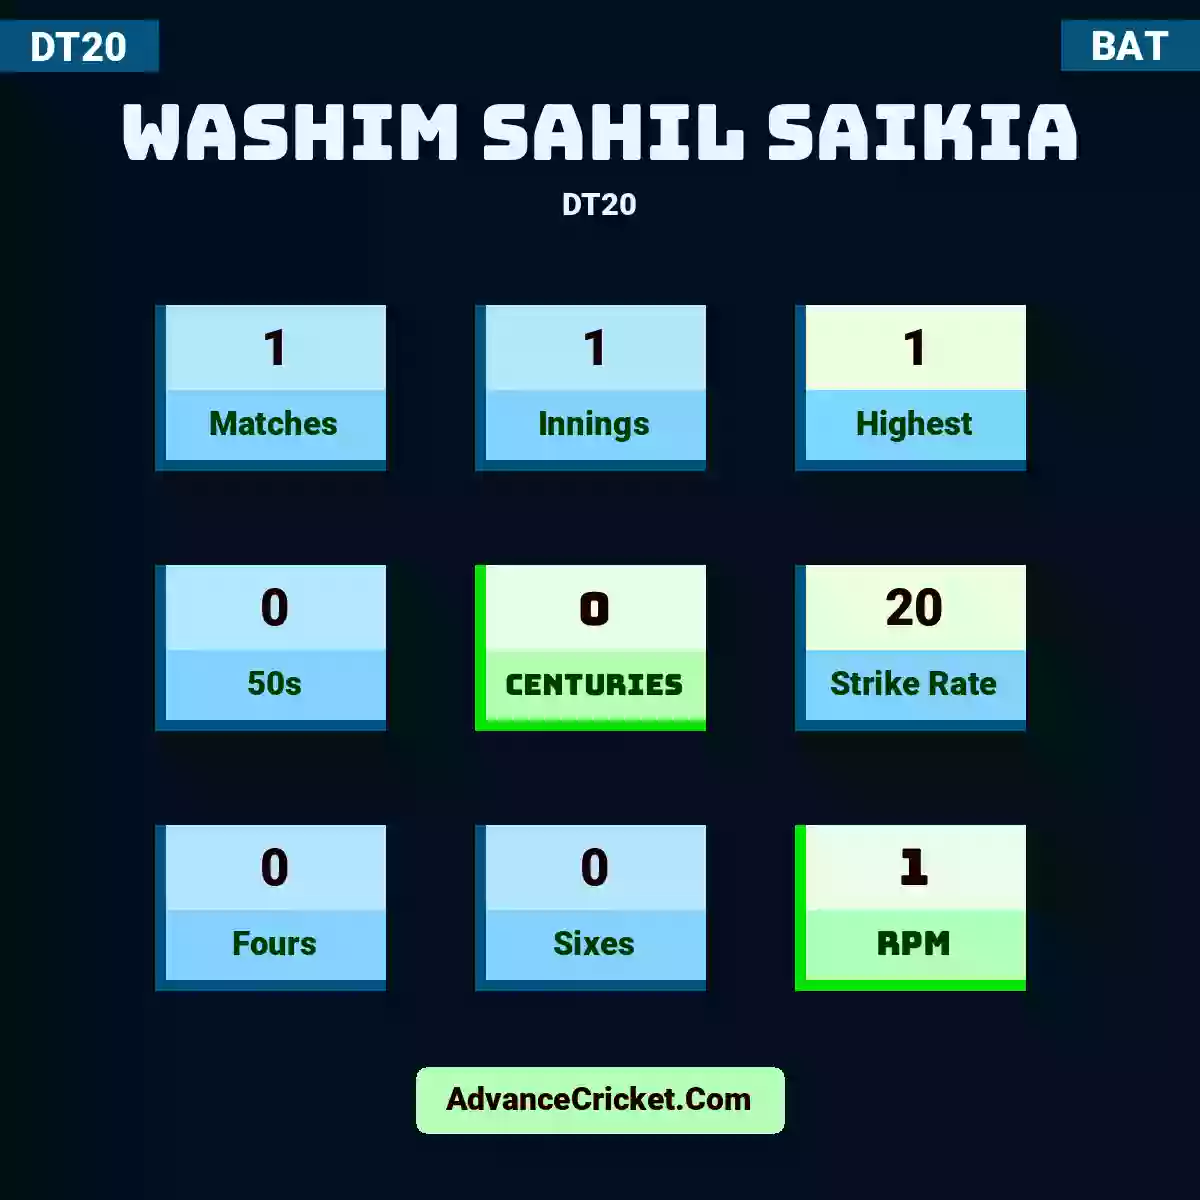 Washim Sahil Saikia DT20 , Washim Sahil Saikia played 1 matches, scored 1 runs as highest, 0 half-centuries, and 0 centuries, with a strike rate of 20. W.Sahil.Saikia hit 0 fours and 0 sixes, with an RPM of 1.